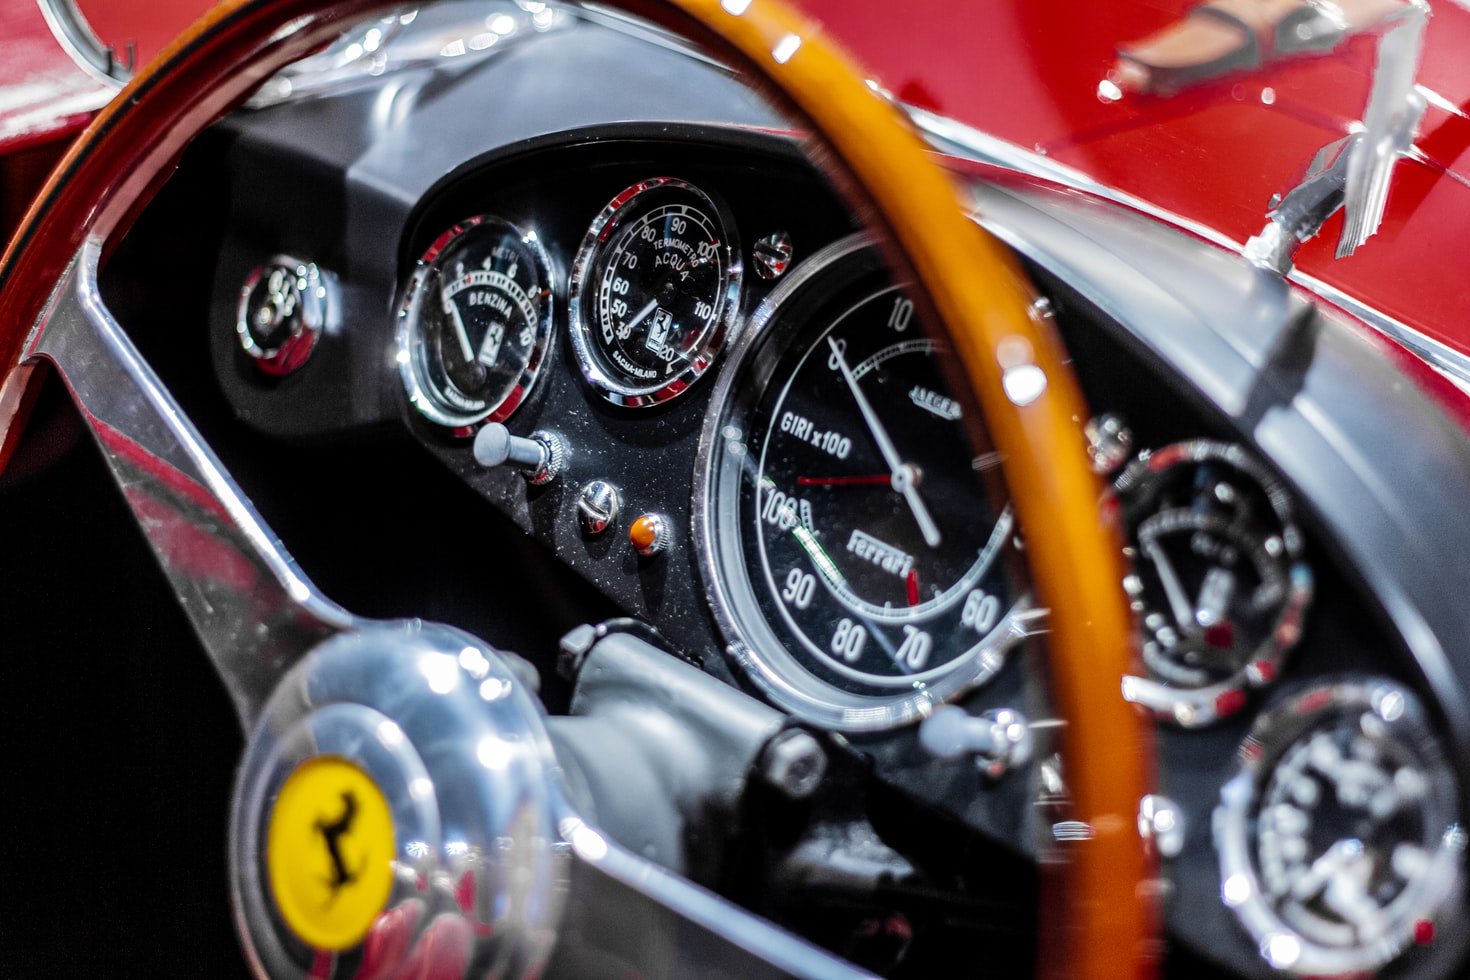 David drove his vintage Ferrari down to the old neighborhood. | Source: Unsplash